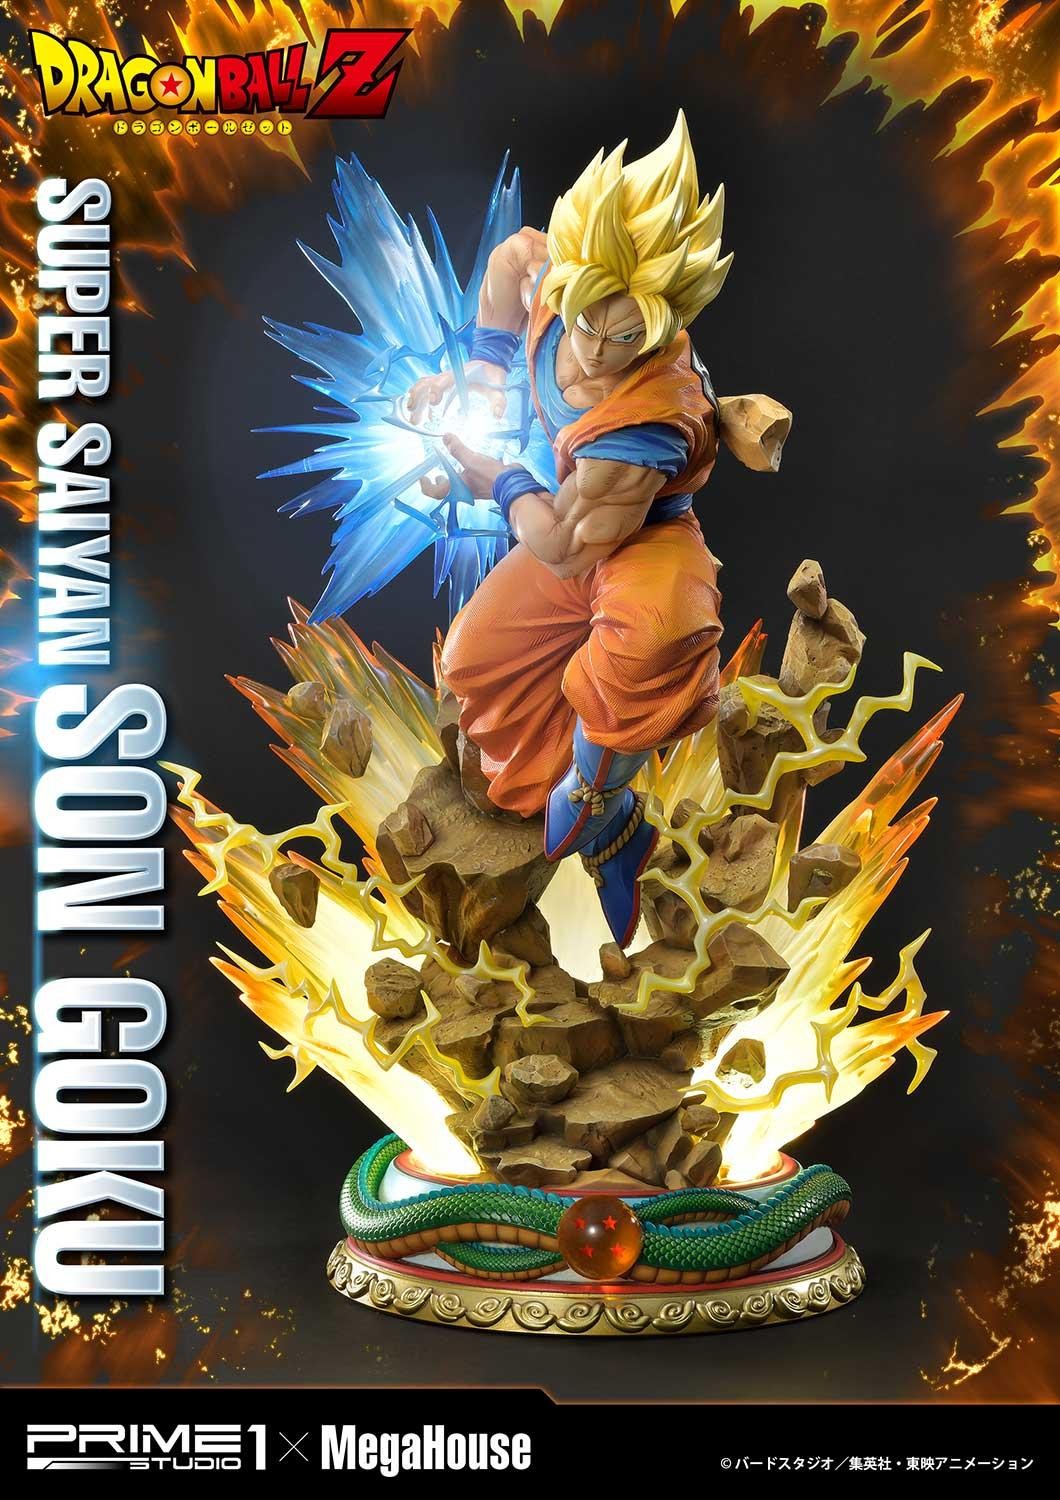 Mega Premium Masterline Dragon Ball Z Super Saiyan Vegeta DX Bonus